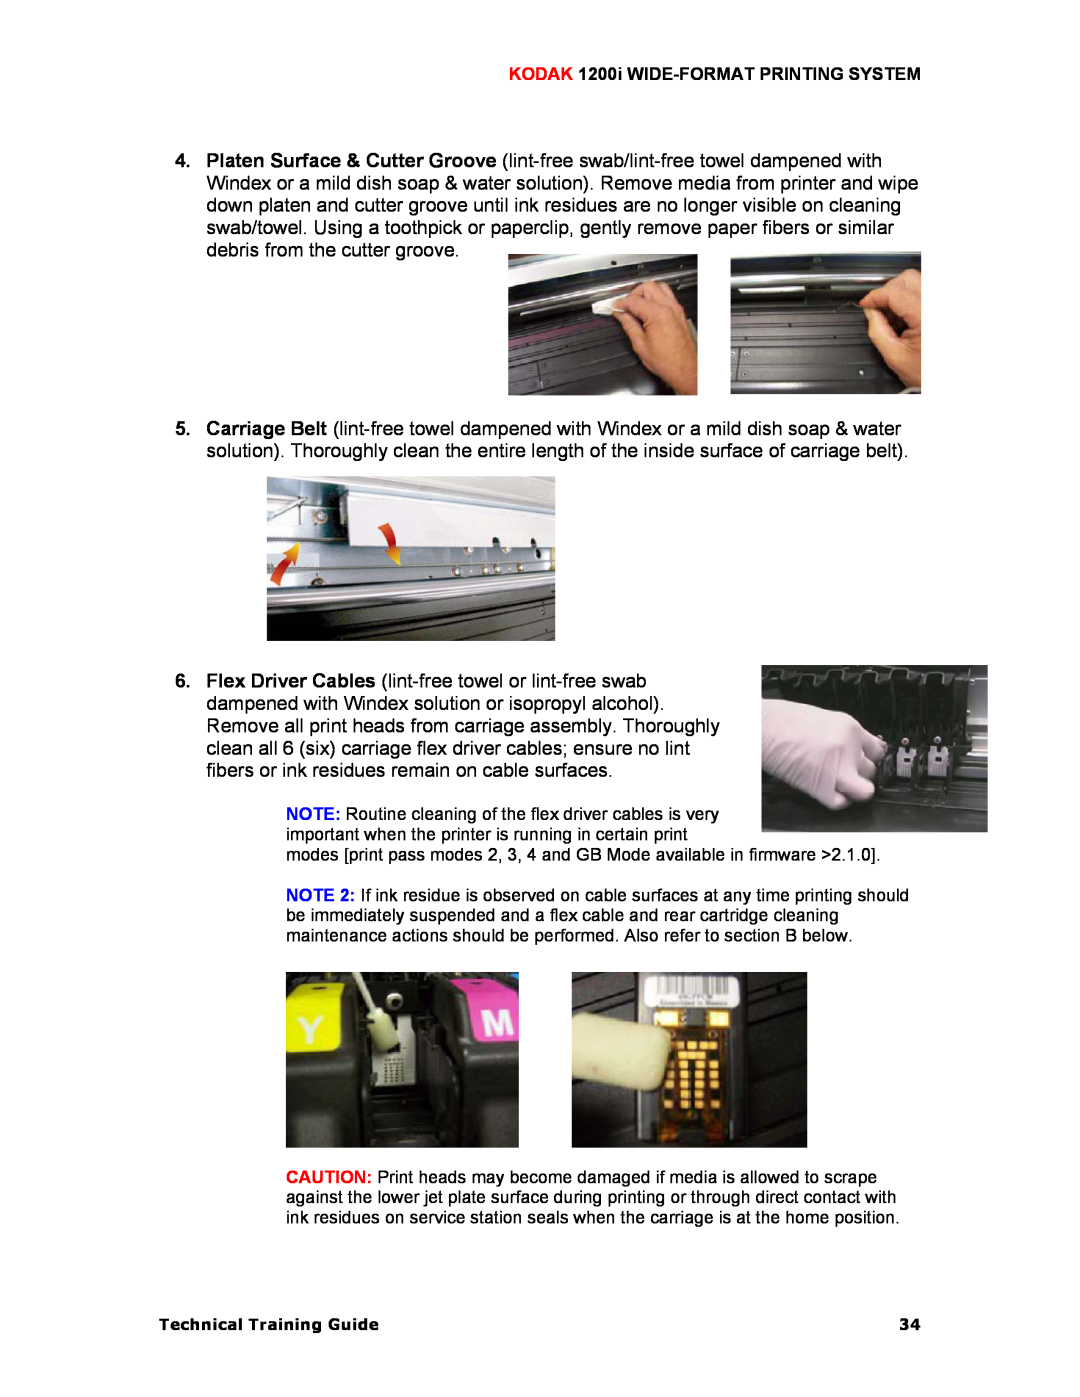 Kodak 1200I manual Technical Training Guide 